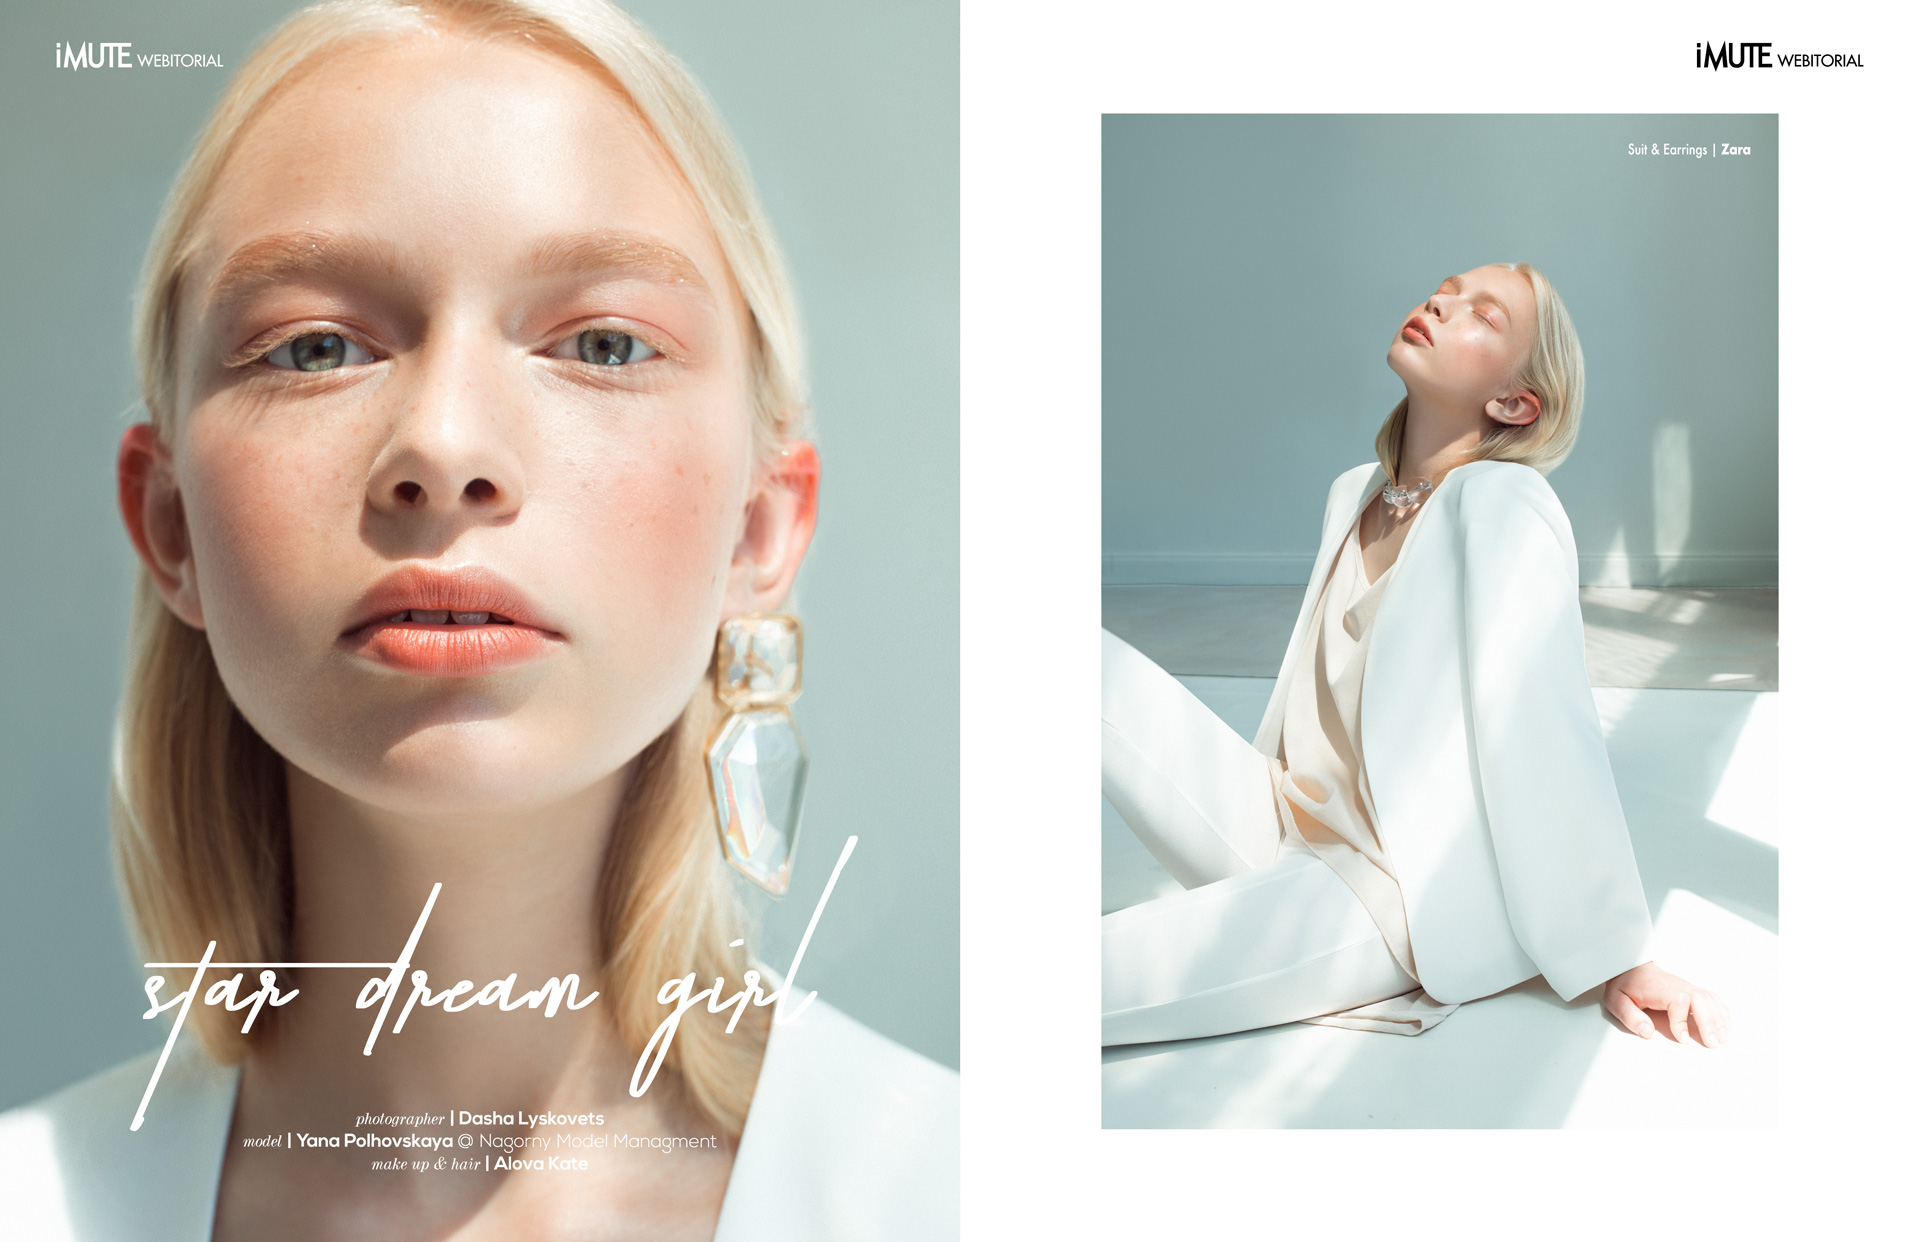 Star dream girl webitorial for iMute Magazine Photographer | Dasha Lyskovets Model | Yana Polhovskaya @ Nagorny Models Makeup & Hair | Alova Kate